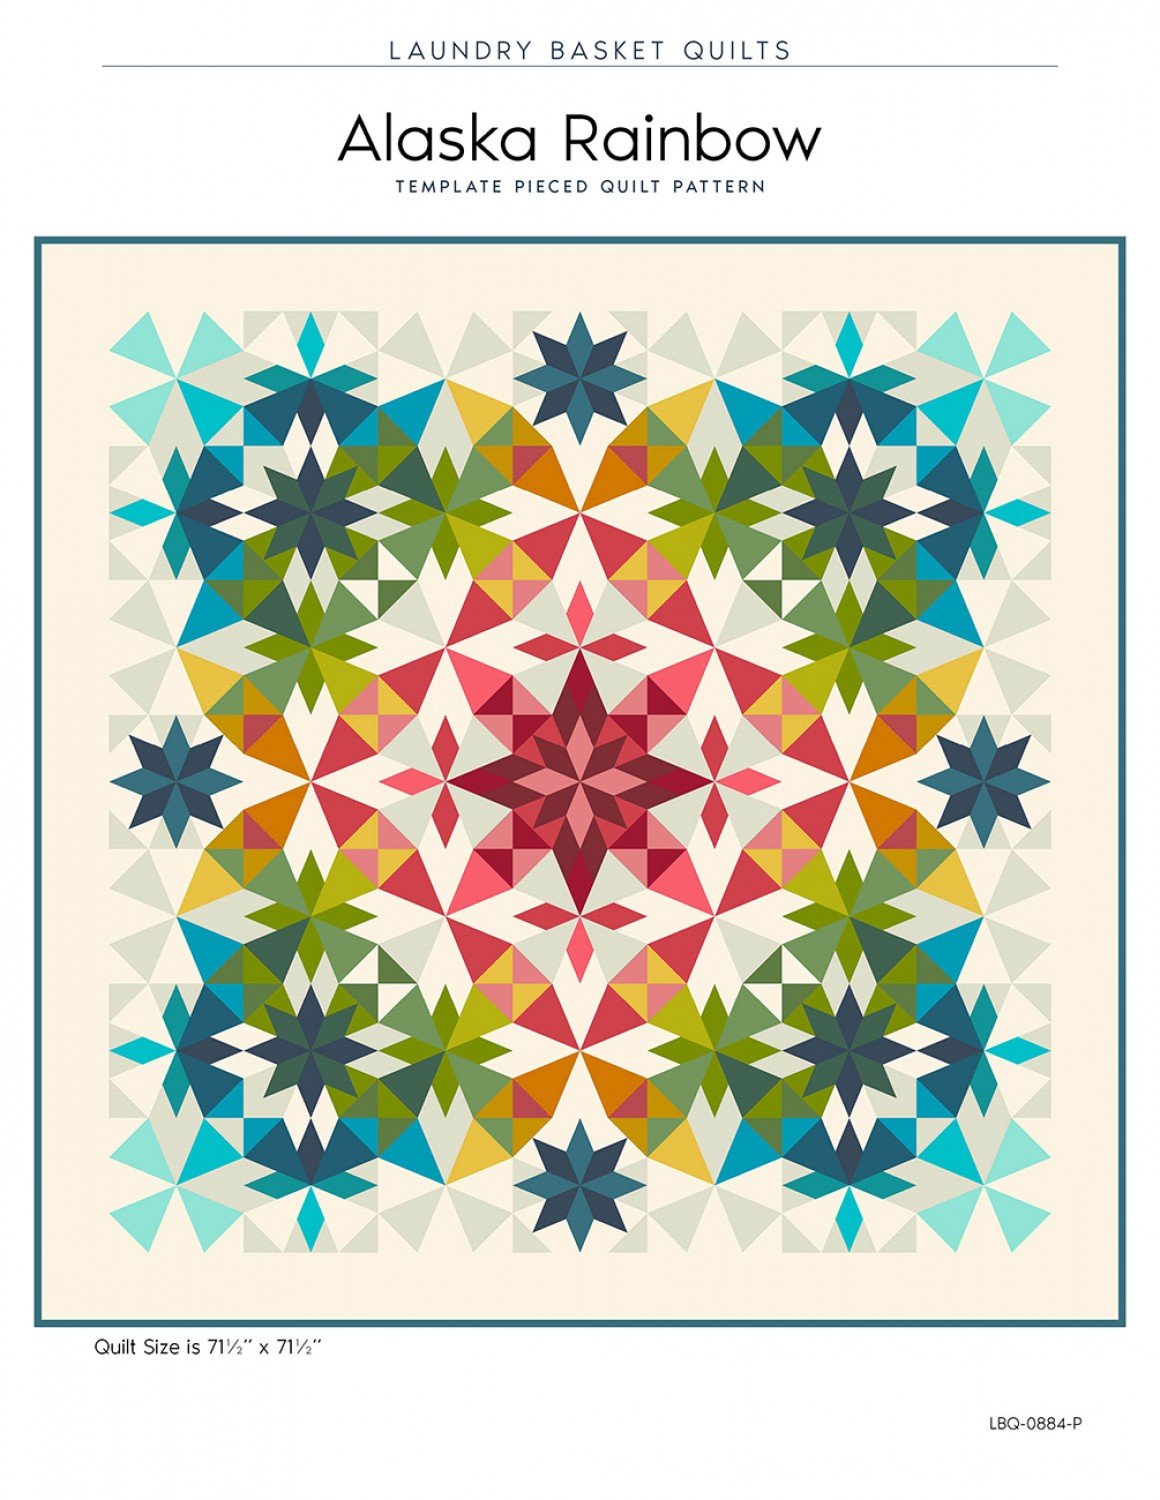 Alaska Rainbow Quilt Pattern by Edyta Sitar of Laundry Basket Quilts